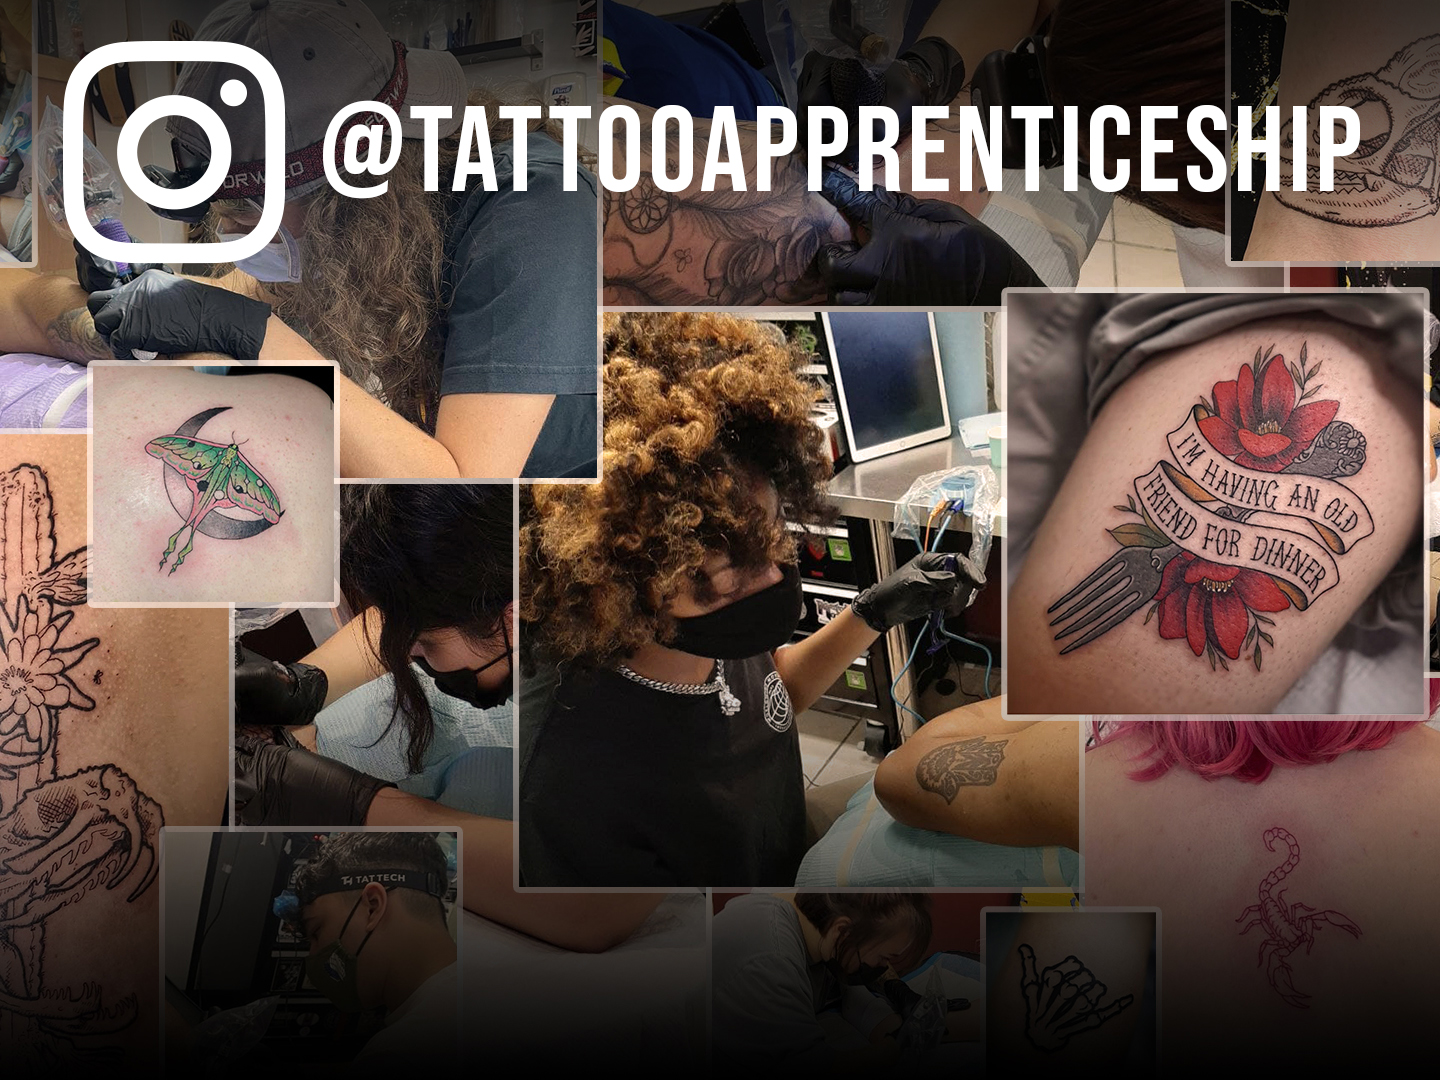 Follow us on IG: @tattooapprenticeship